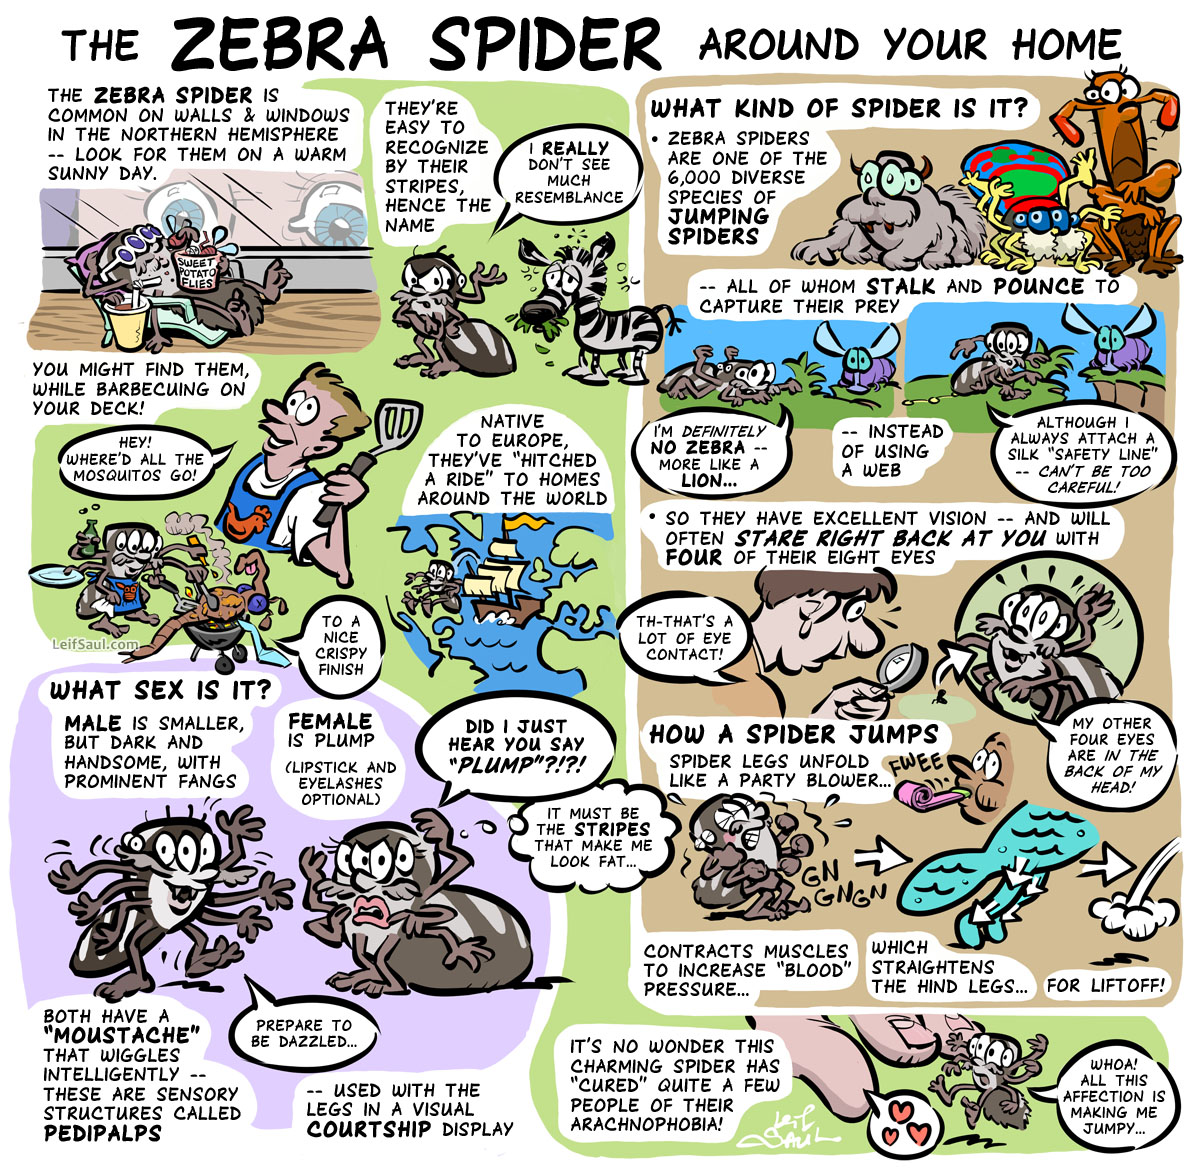 The zebra spider around your home